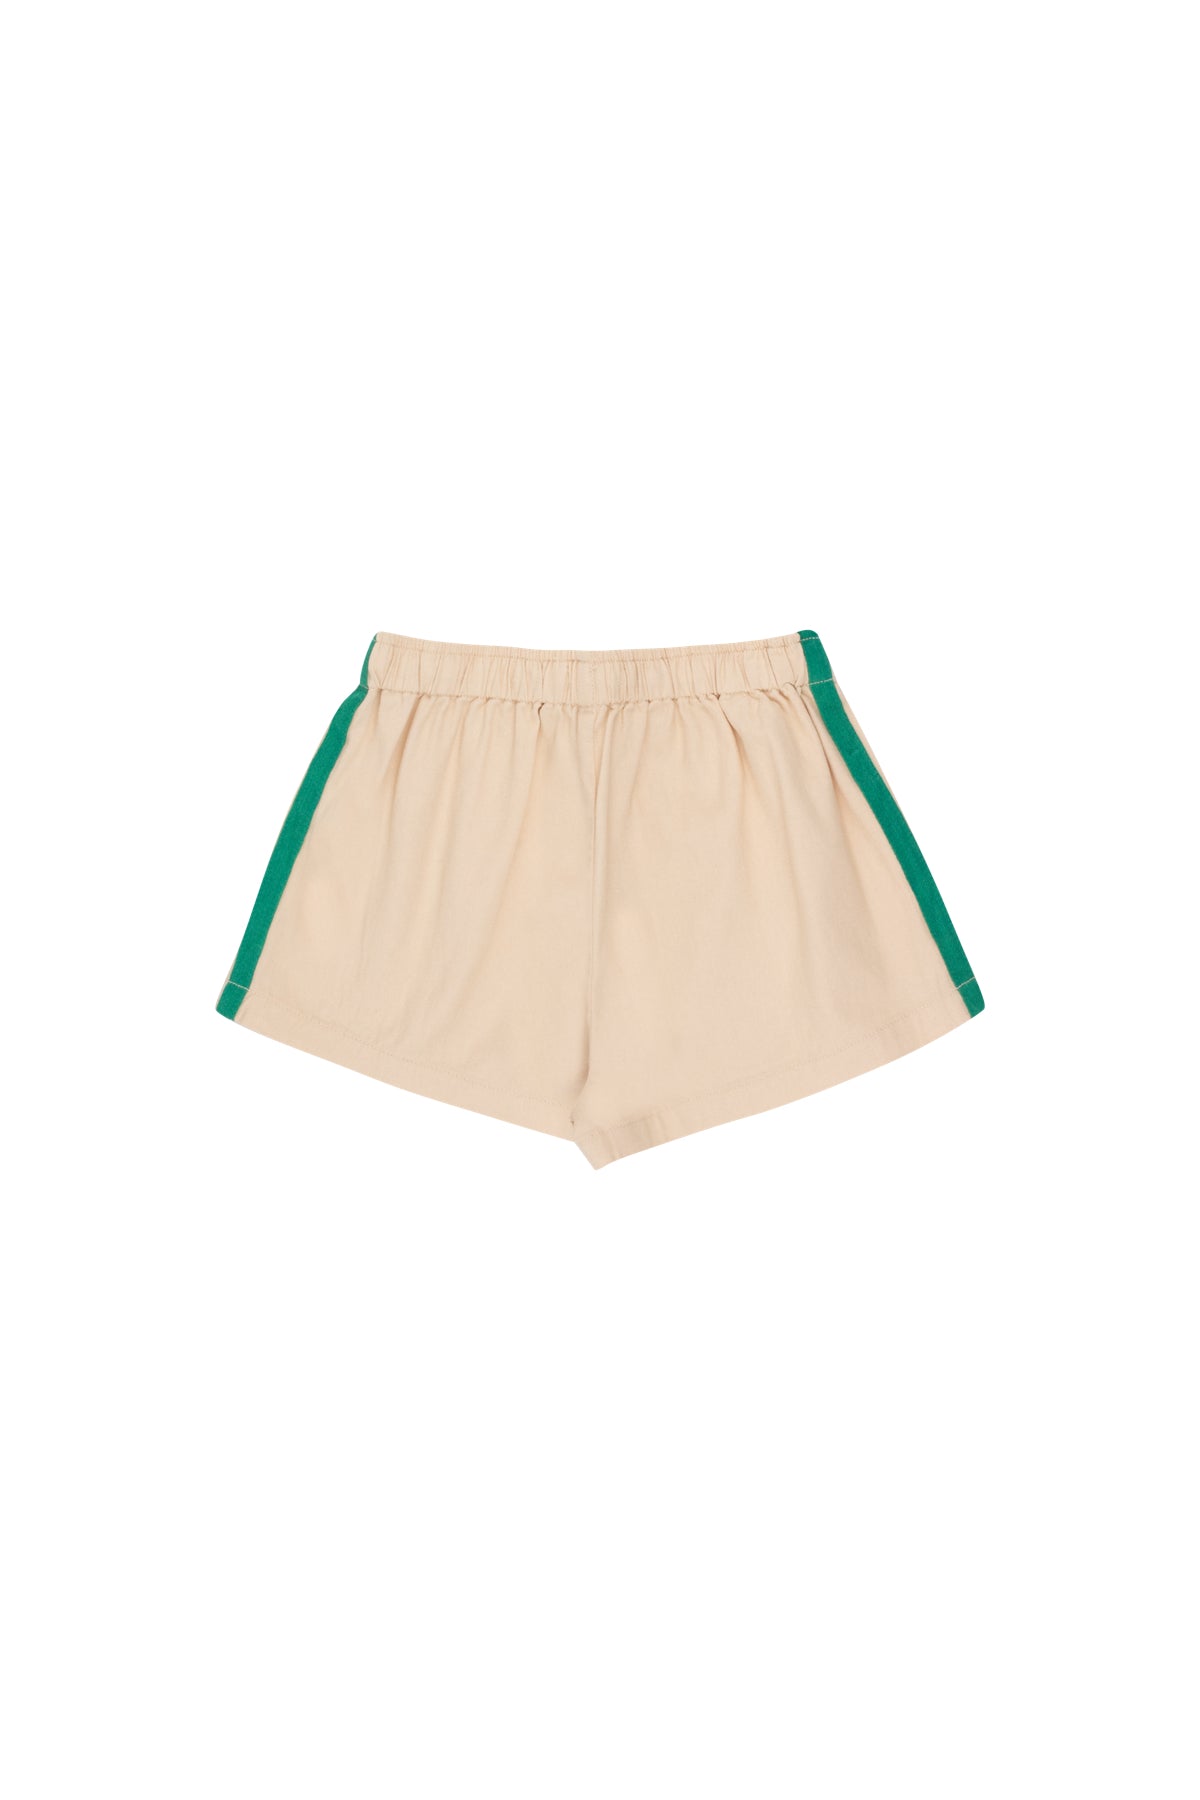 Tiny Cottons - solid shorts - vanilla